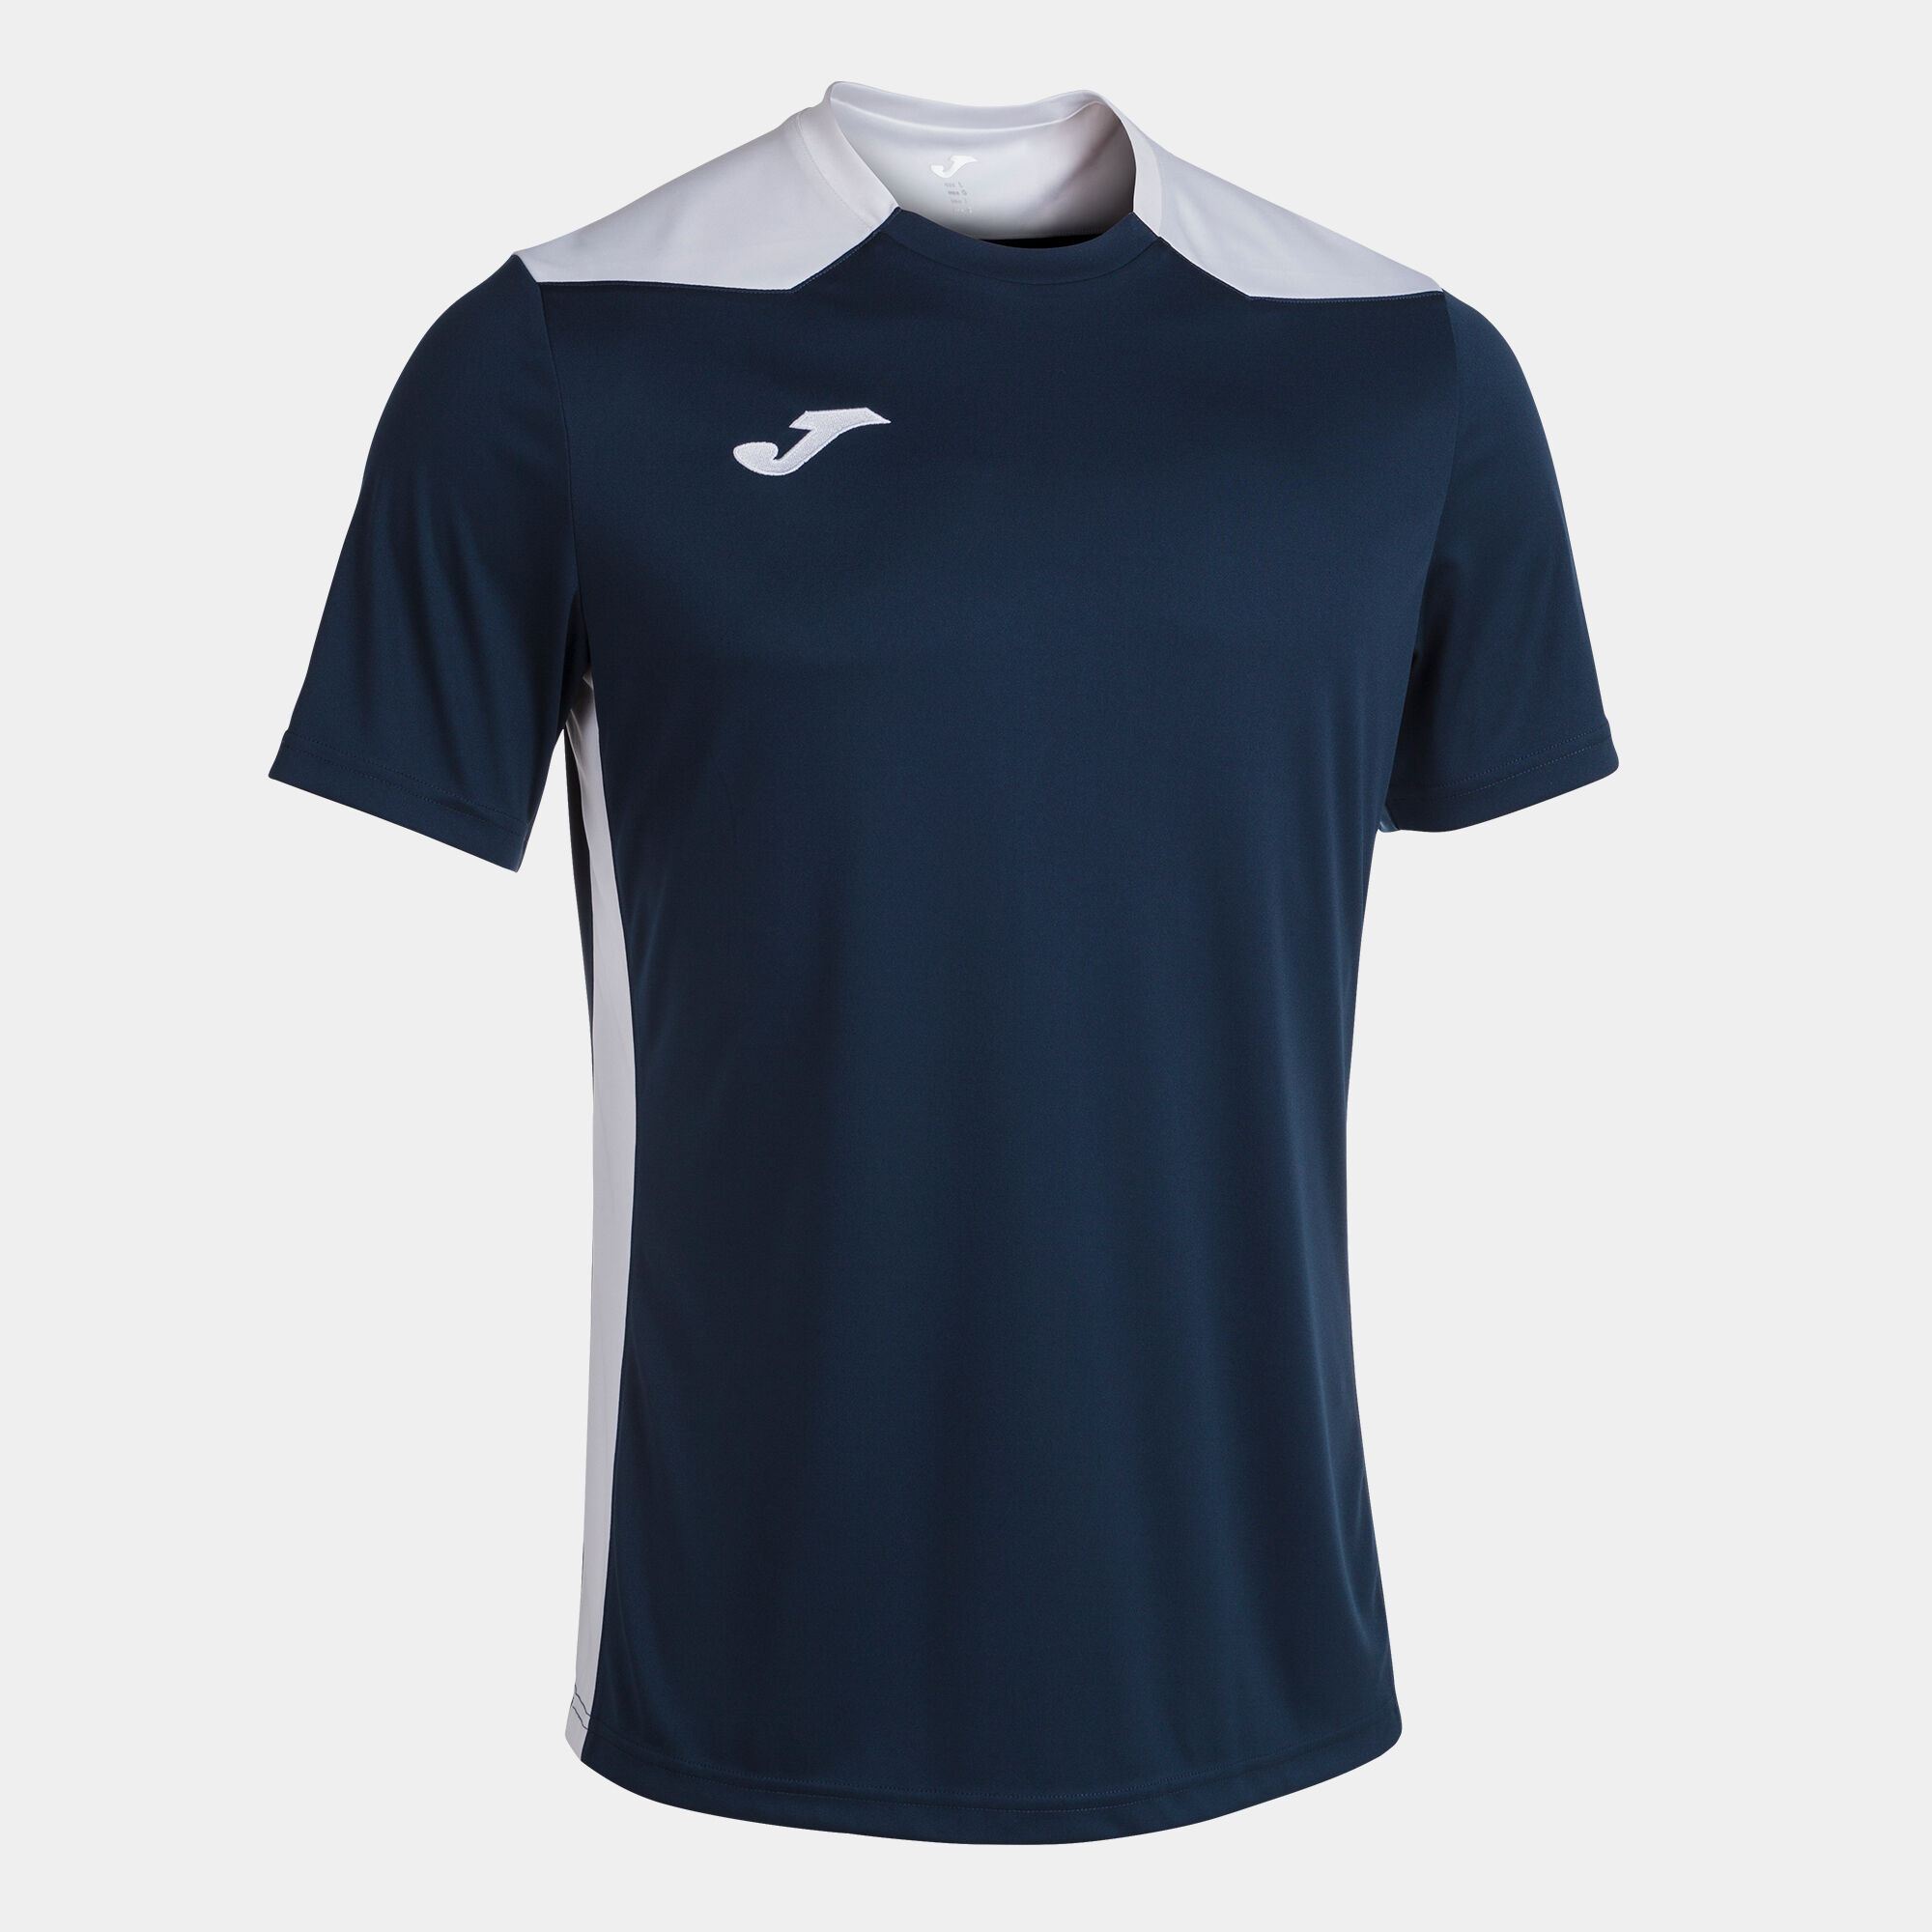 Shirt short sleeve man Championship VI navy blue white